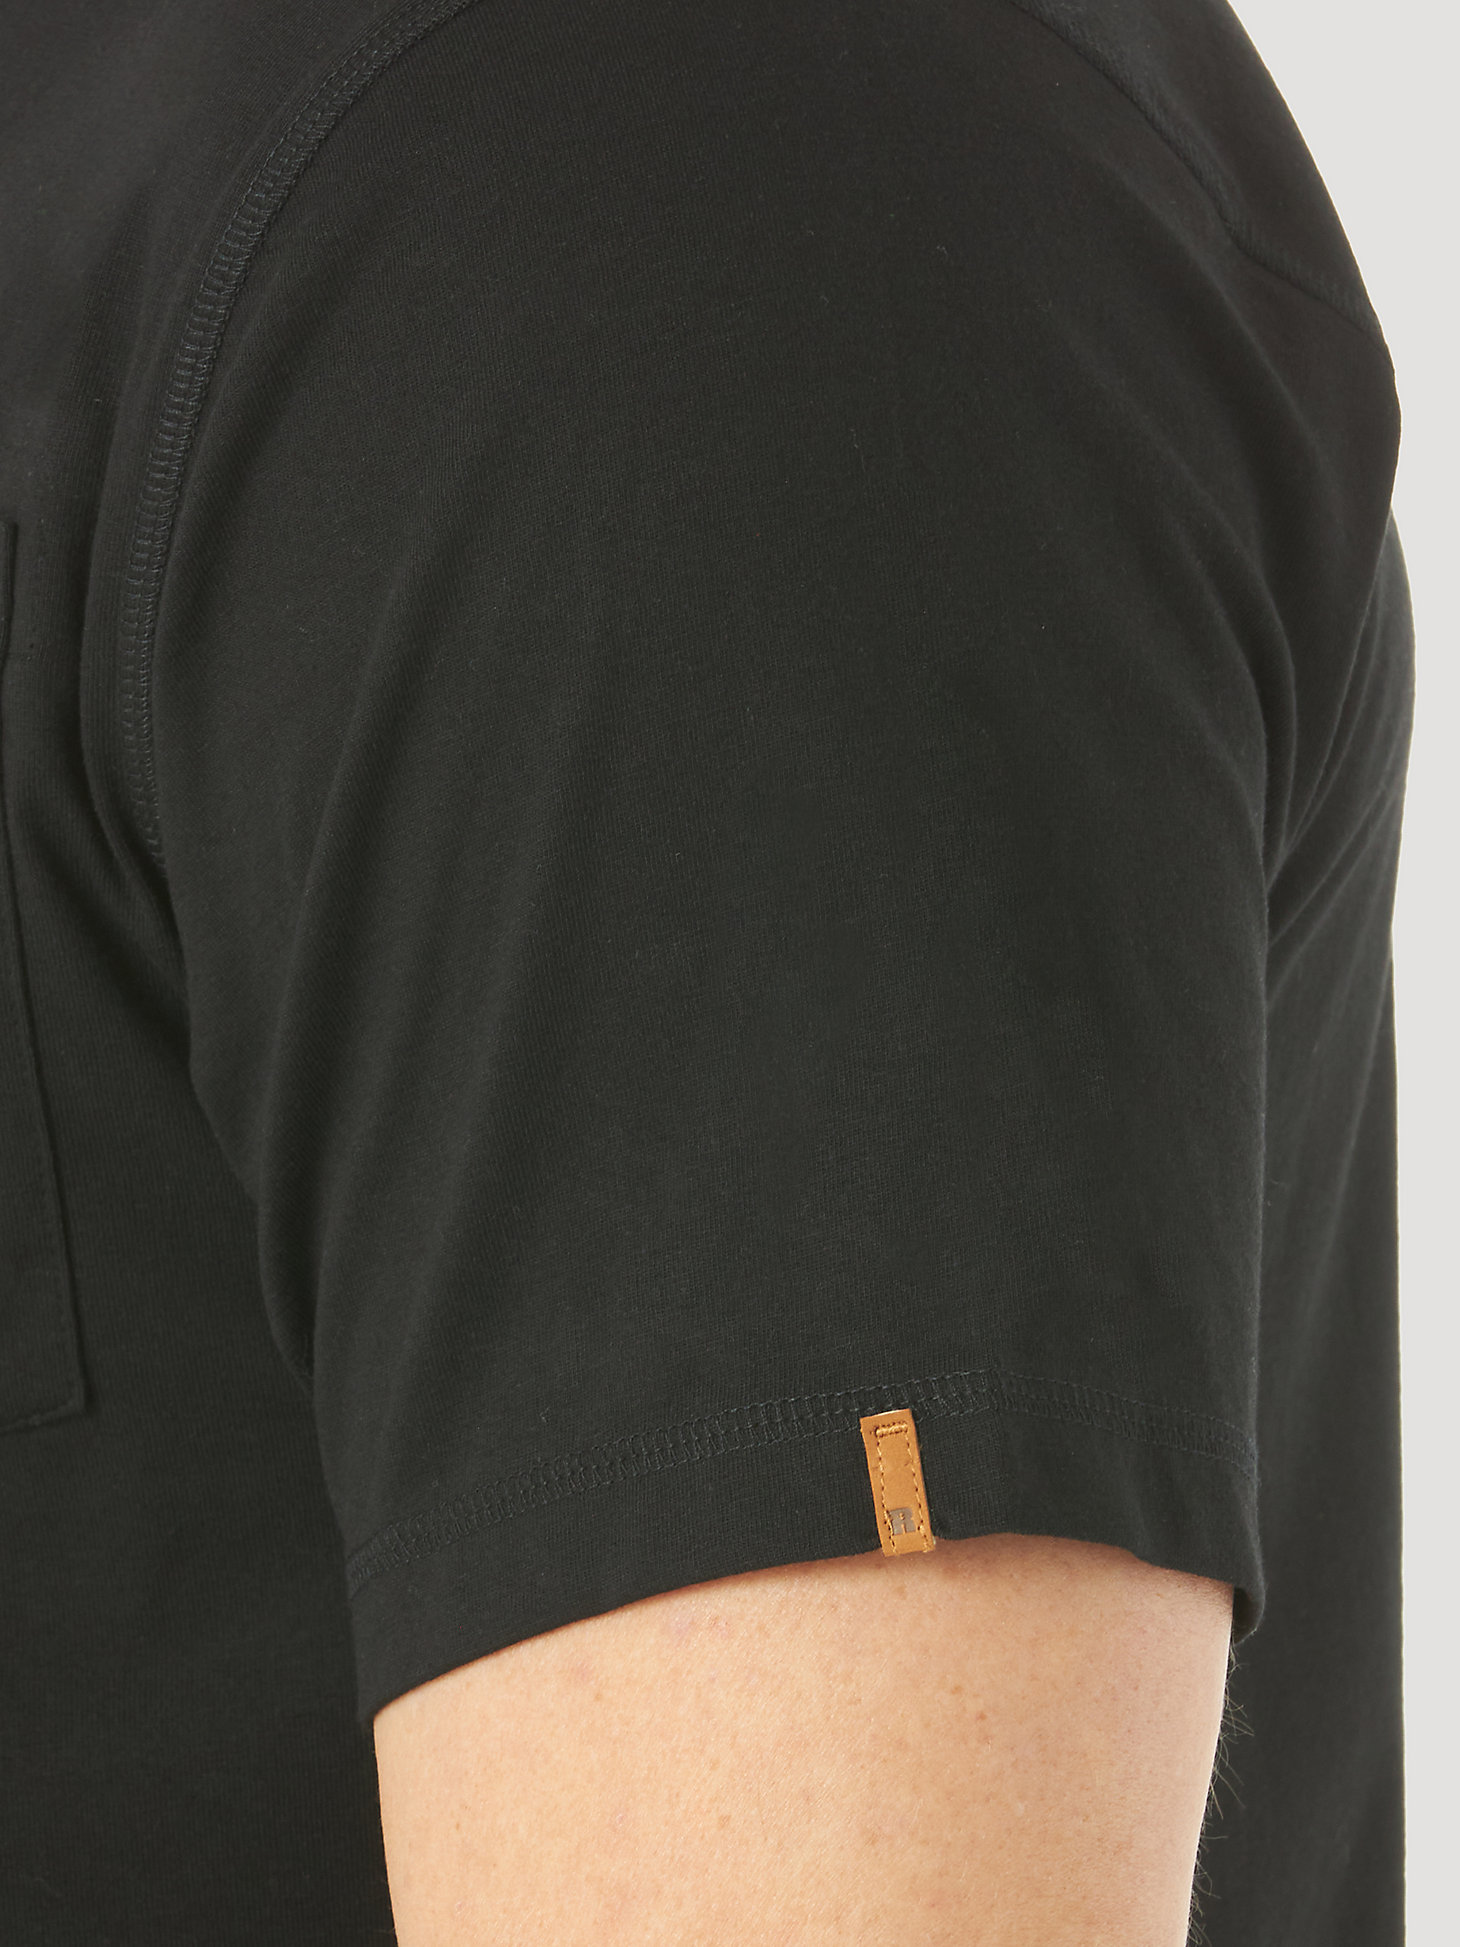 Wrangler® RIGGS Workwear® Short Sleeve 1 Pocket Performance T-Shirt in Black alternative view 3